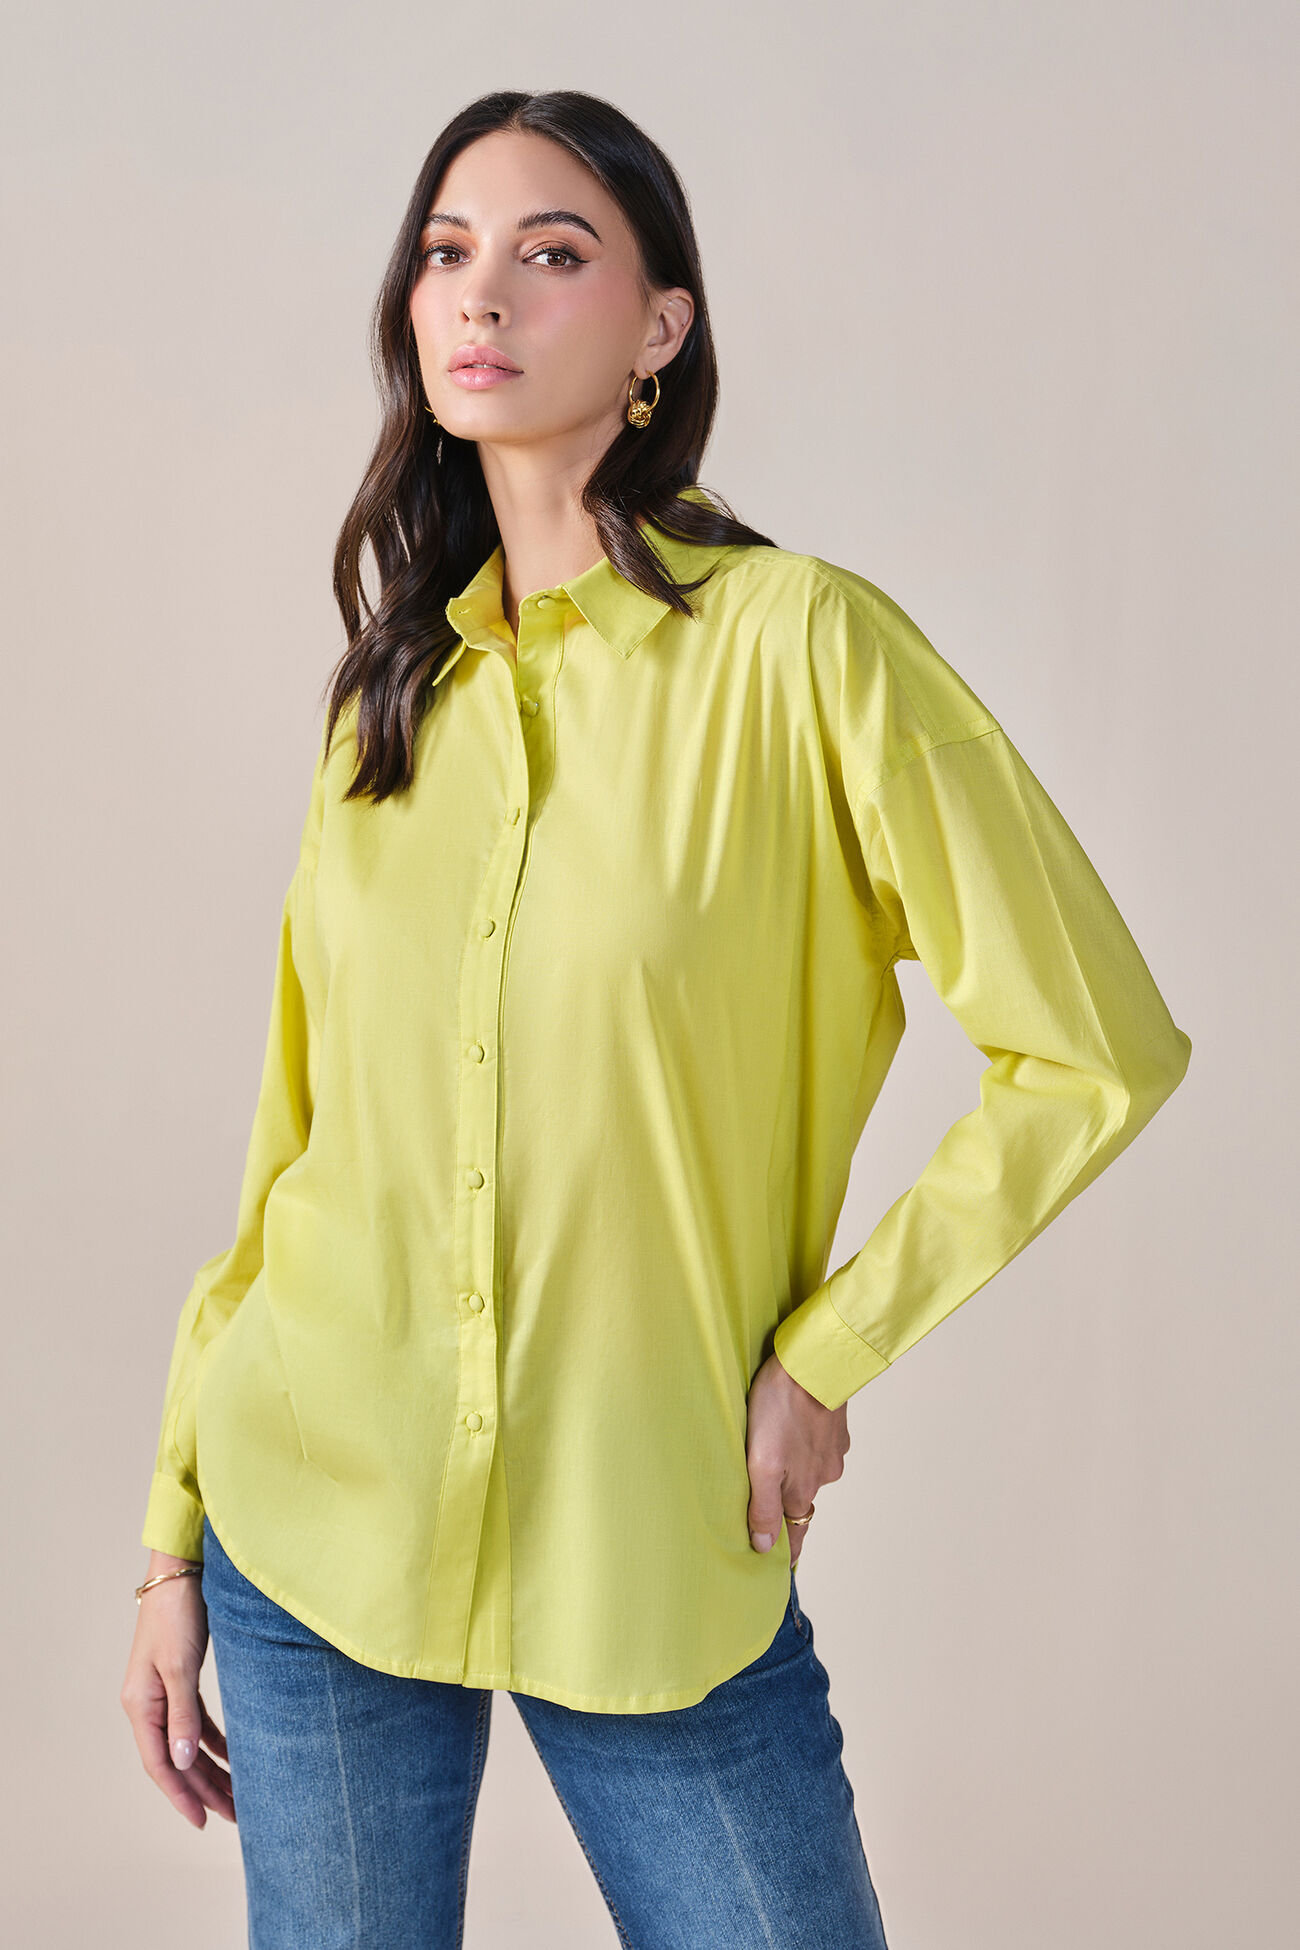 Sensational Solid Cotton Shirt, Lime Green, image 3